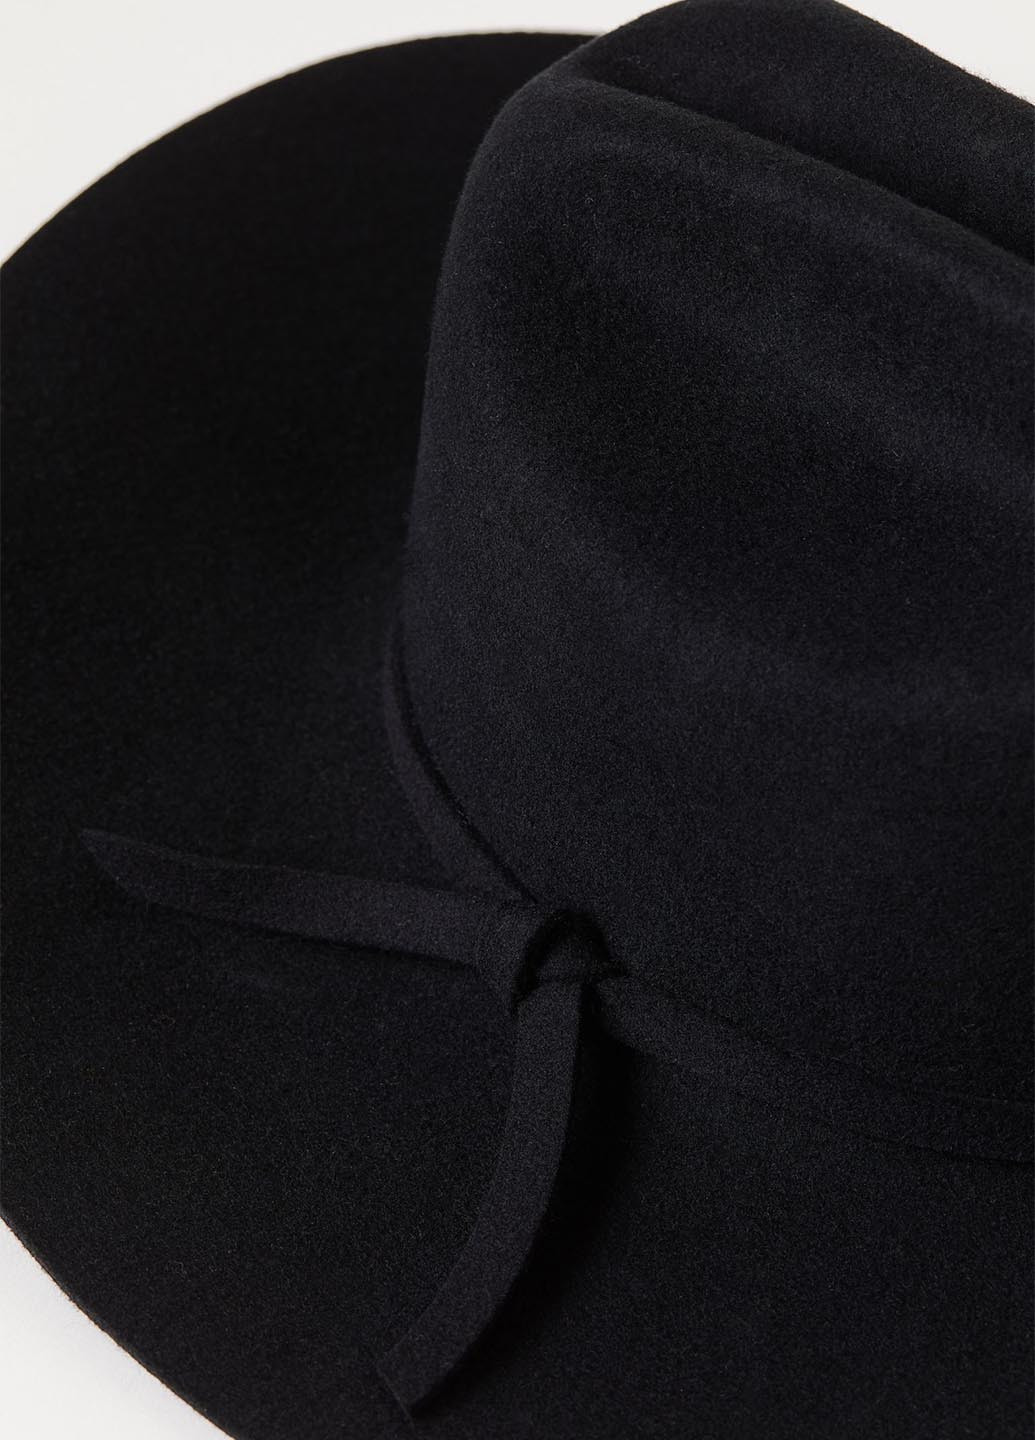 Шляпа H&M (261029571)